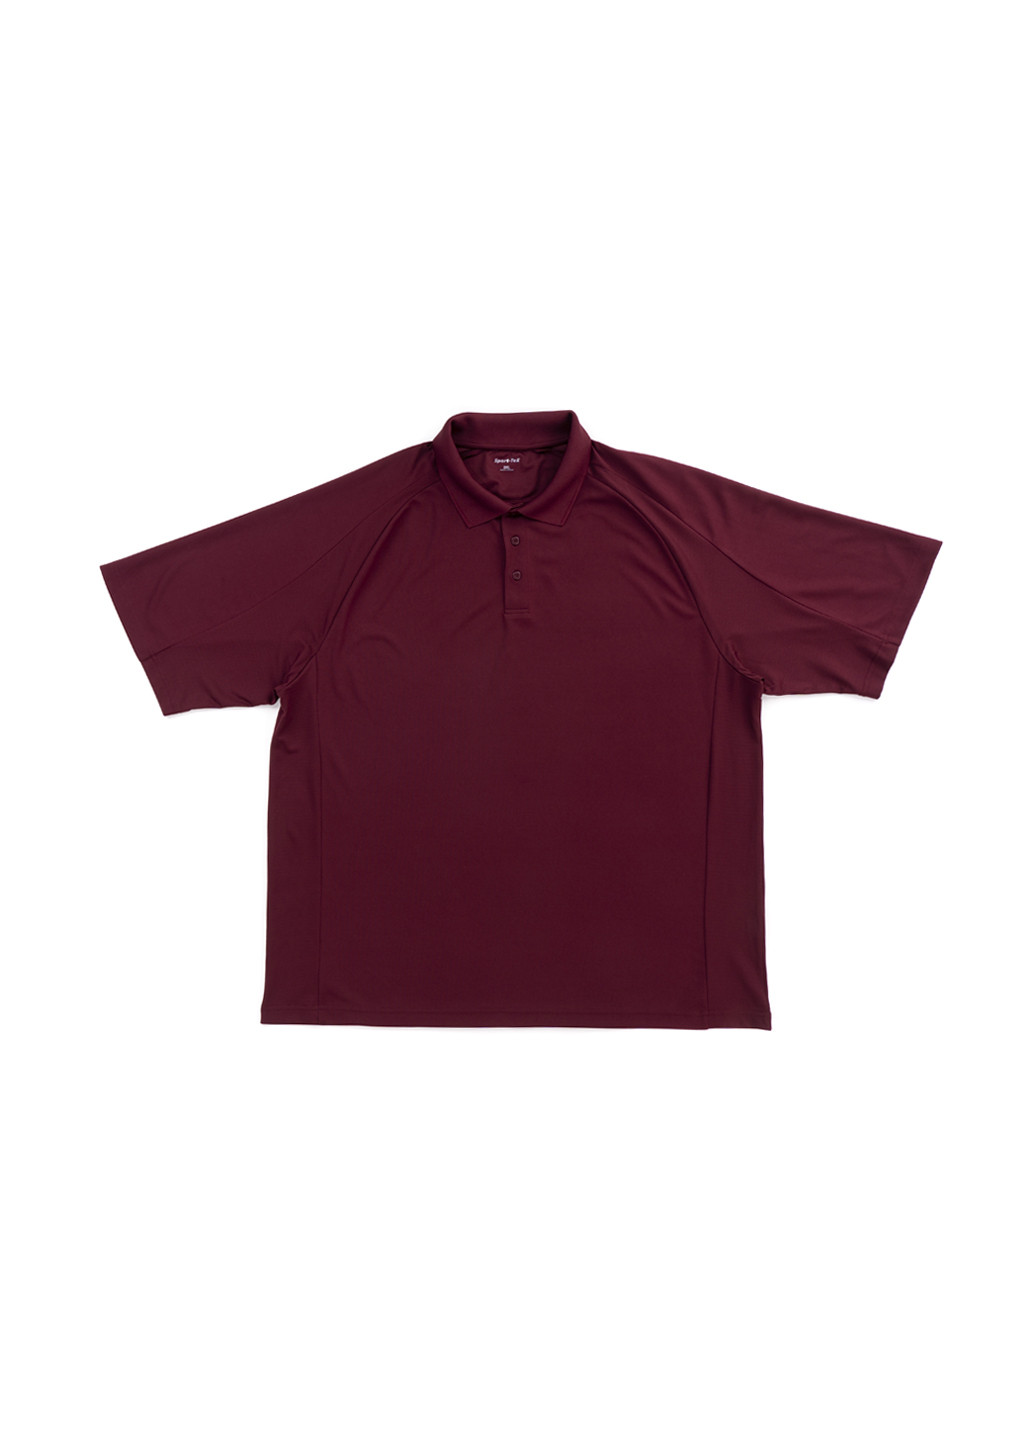 Бордовая футболка-поло для мужчин SPORT TEK однотонная